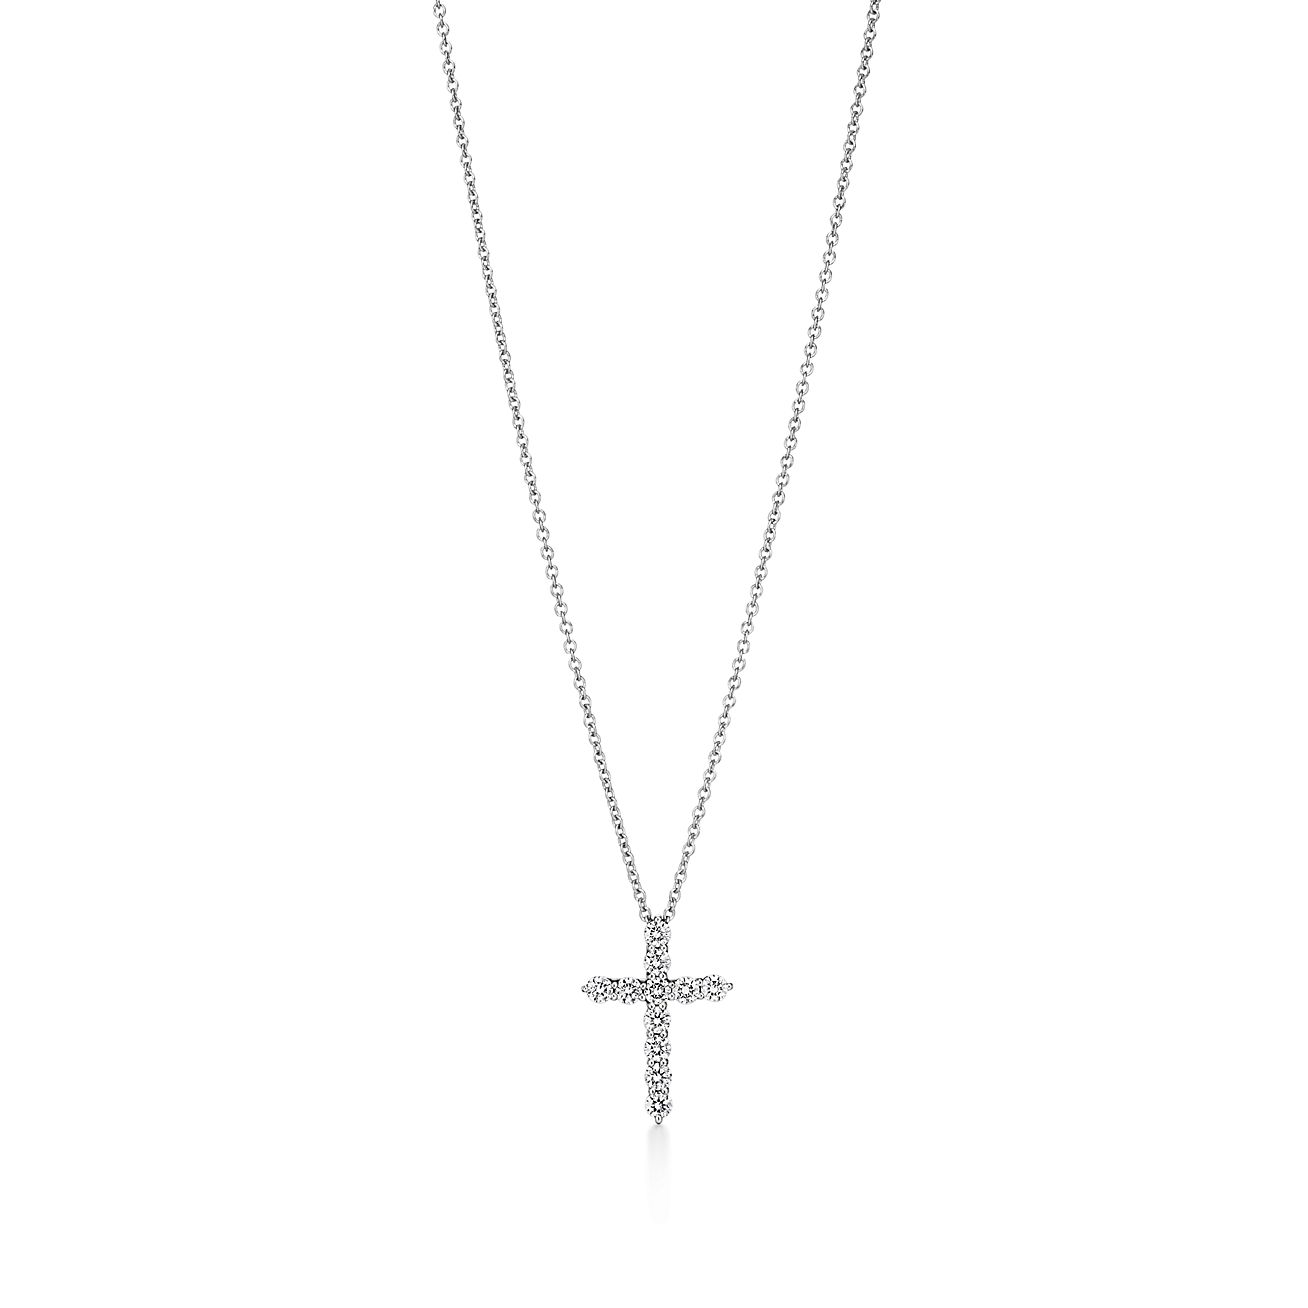 Pentland Cross Pendant | Silver Cross Necklace Pendant | NightRider Jewelry